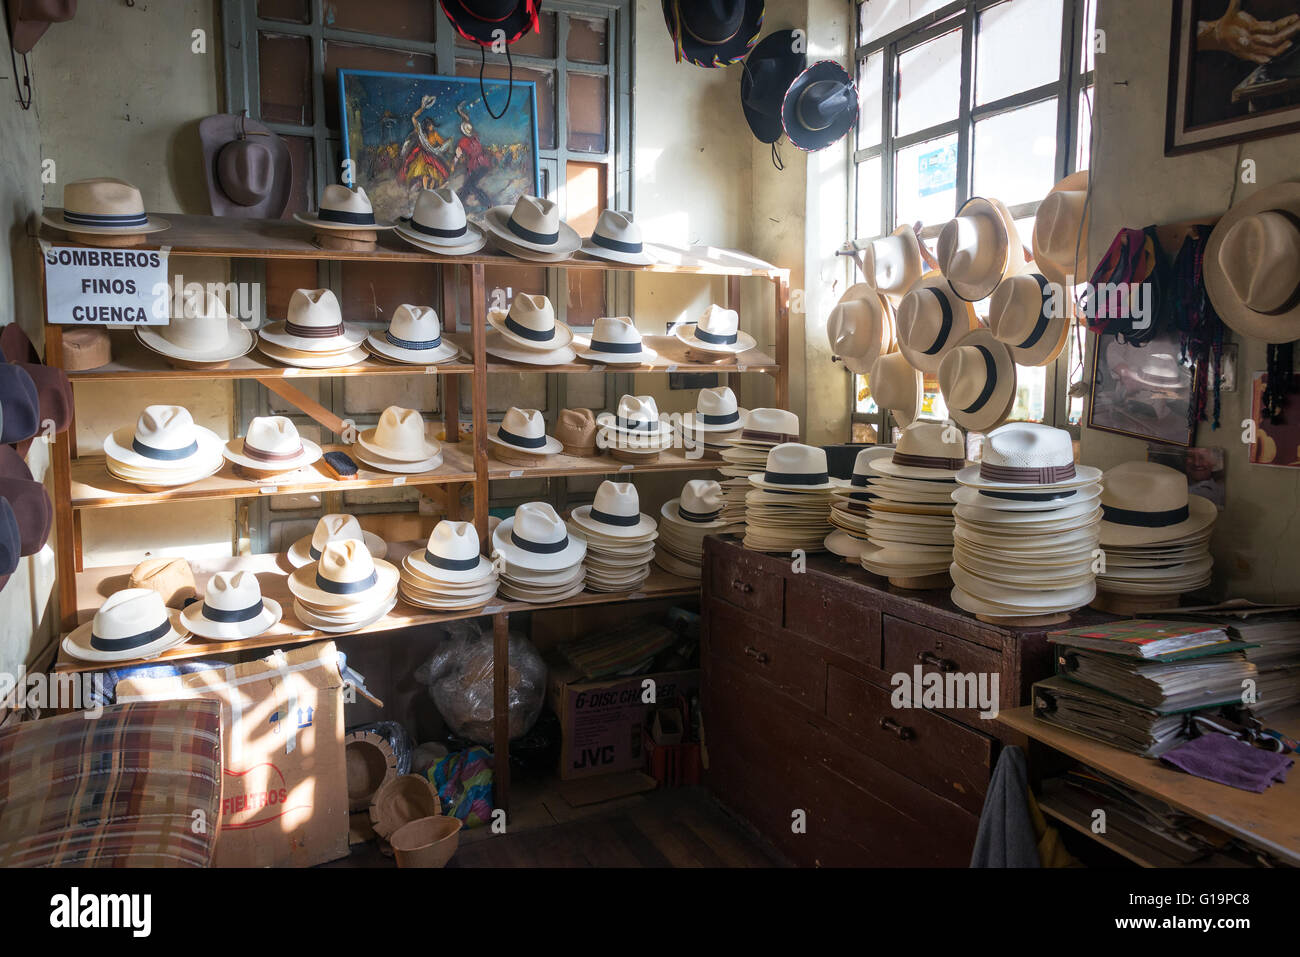 Negozio di vendita Panama cappelli in Cuenca, Ecuador Foto Stock